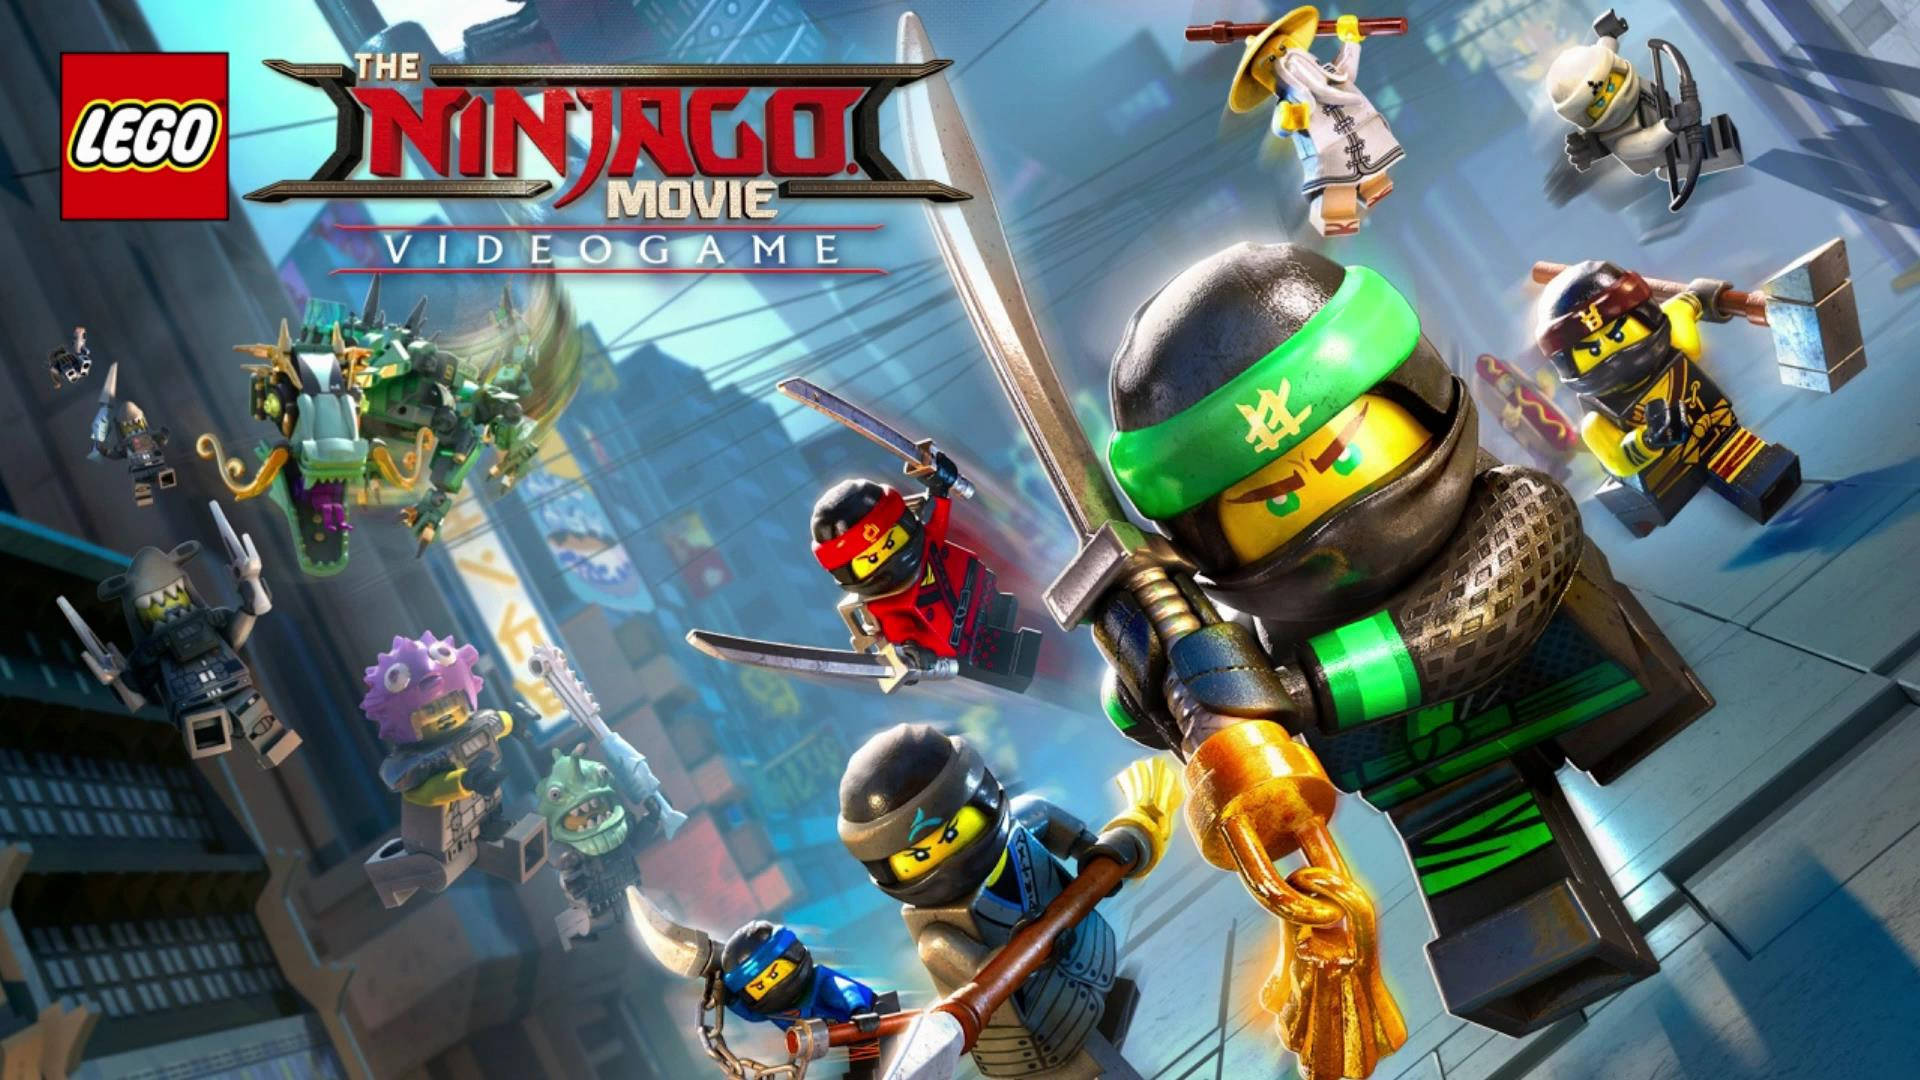 Lego Ninjago Video Game Cover Background